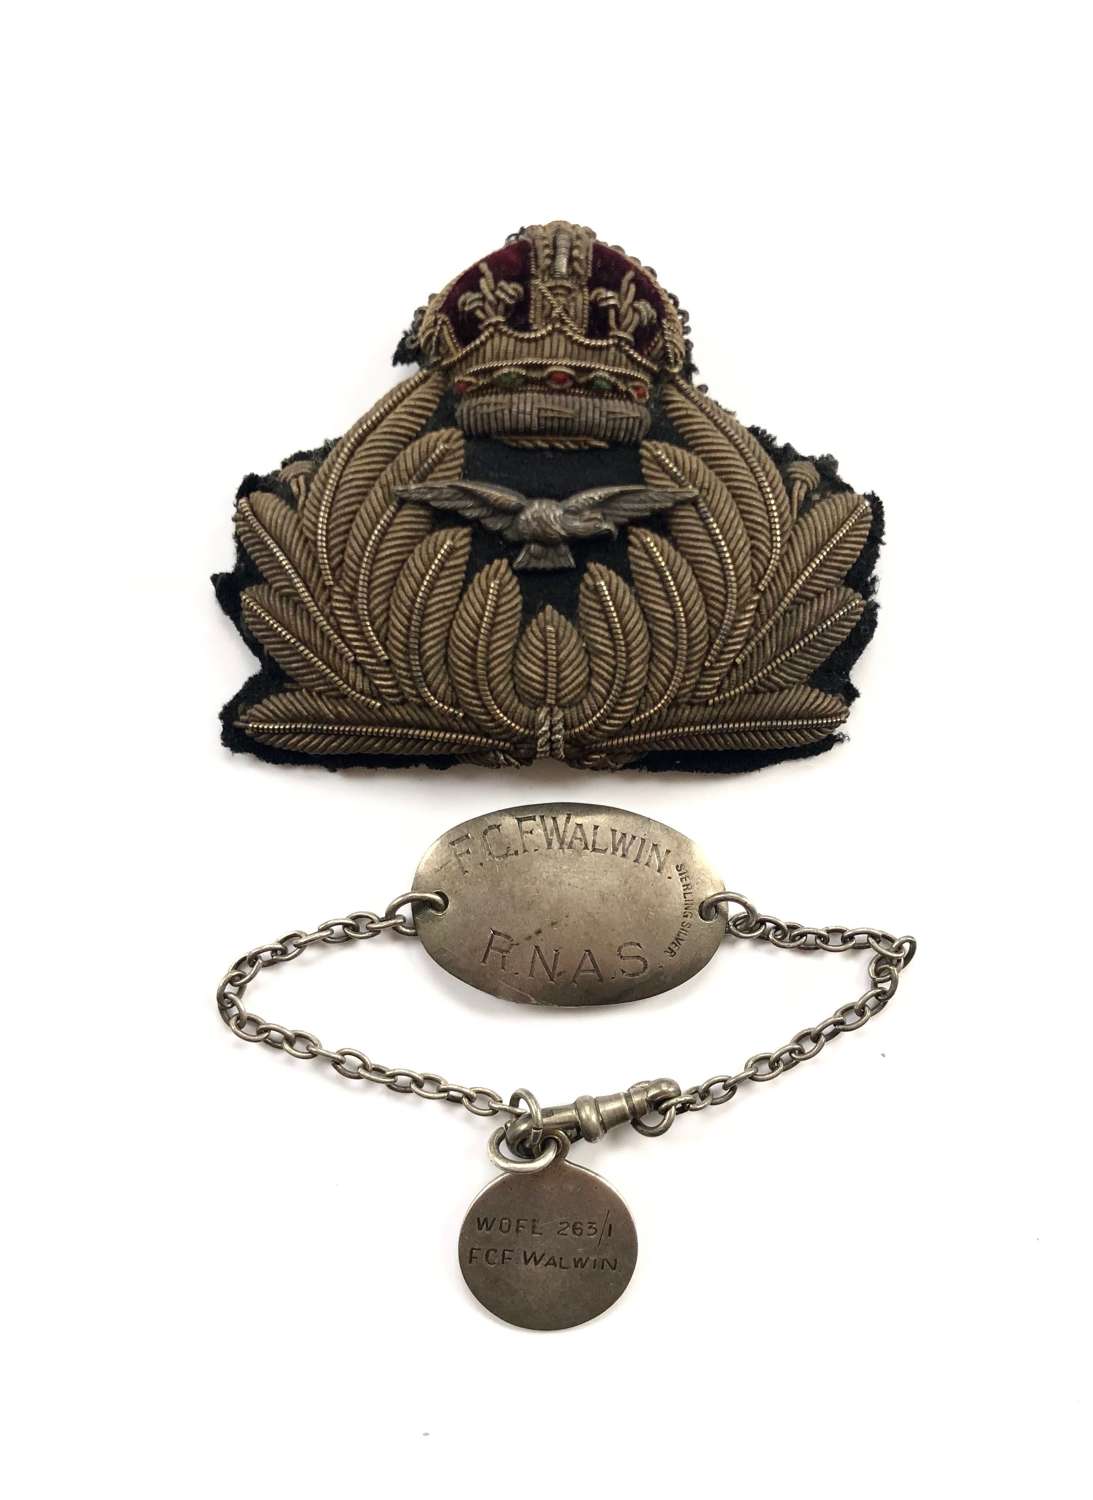 WW1 RNAS Attributed Officer’s Cap Badge & ID Bracelet.